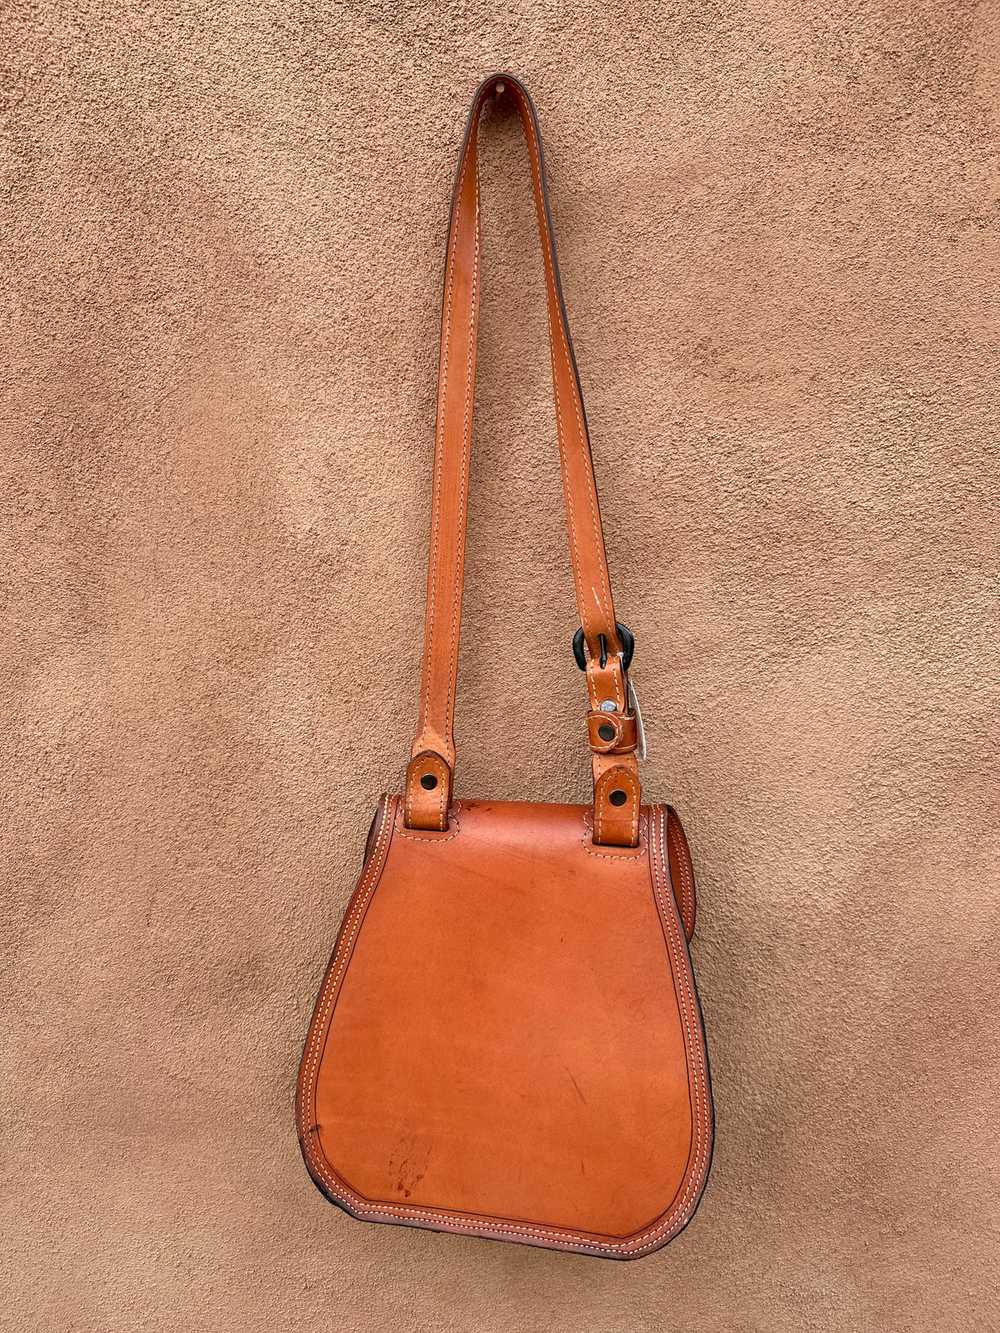 Santa Fe Leather Goods Handmade Saddle Purse - image 4